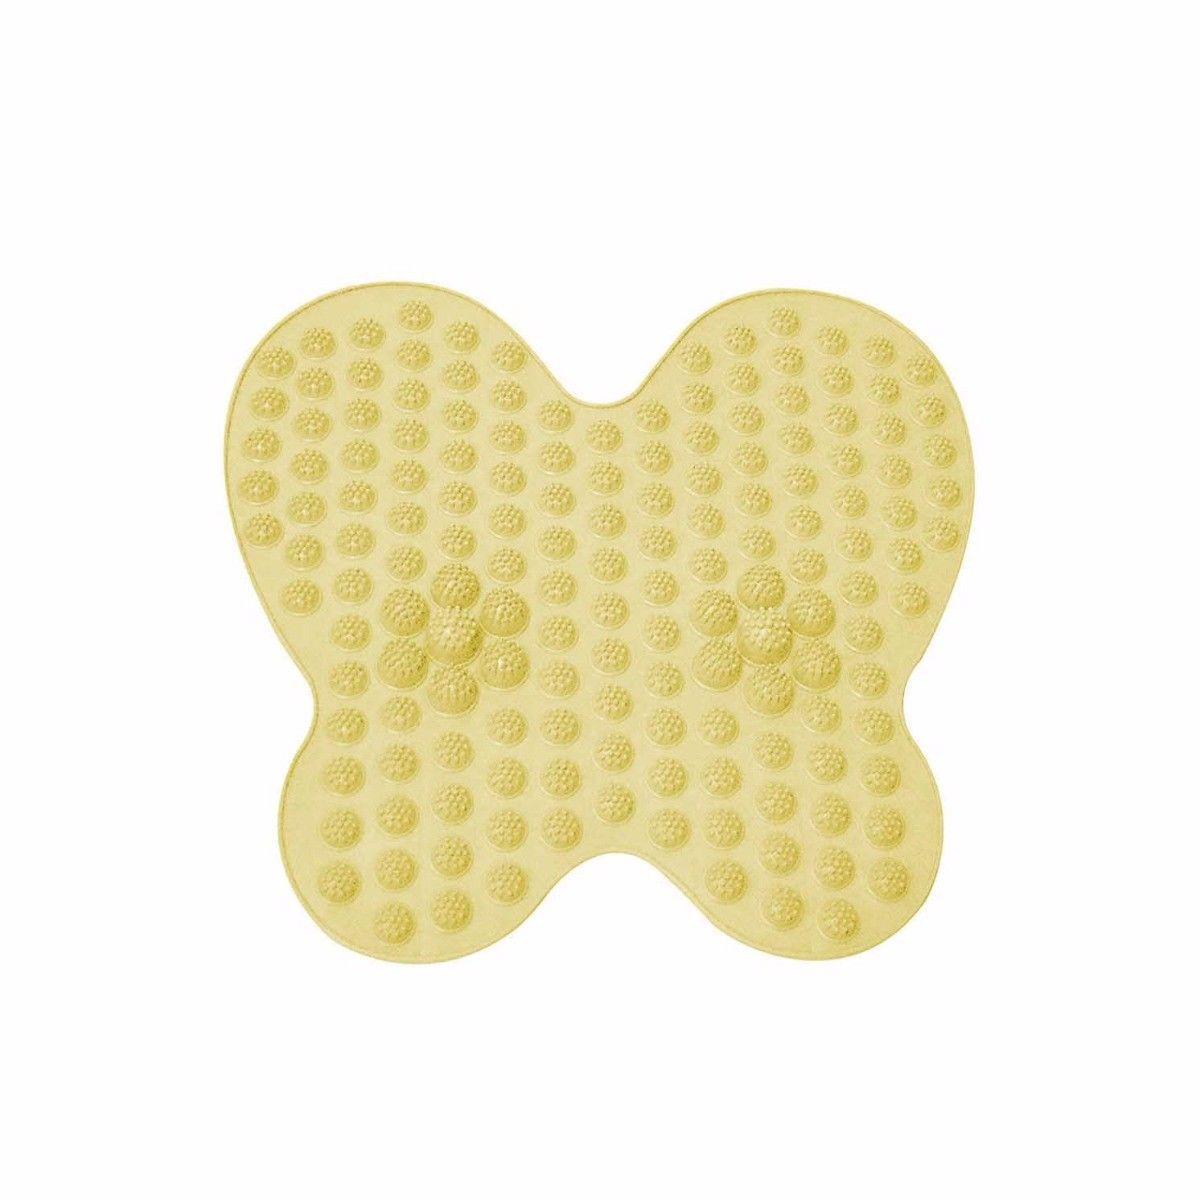 Washable Foot Pain Relief Massage Reflexology Mat Butterfly Shape 36.5 cm Assorted Colours 4573 (Parcel Rate)